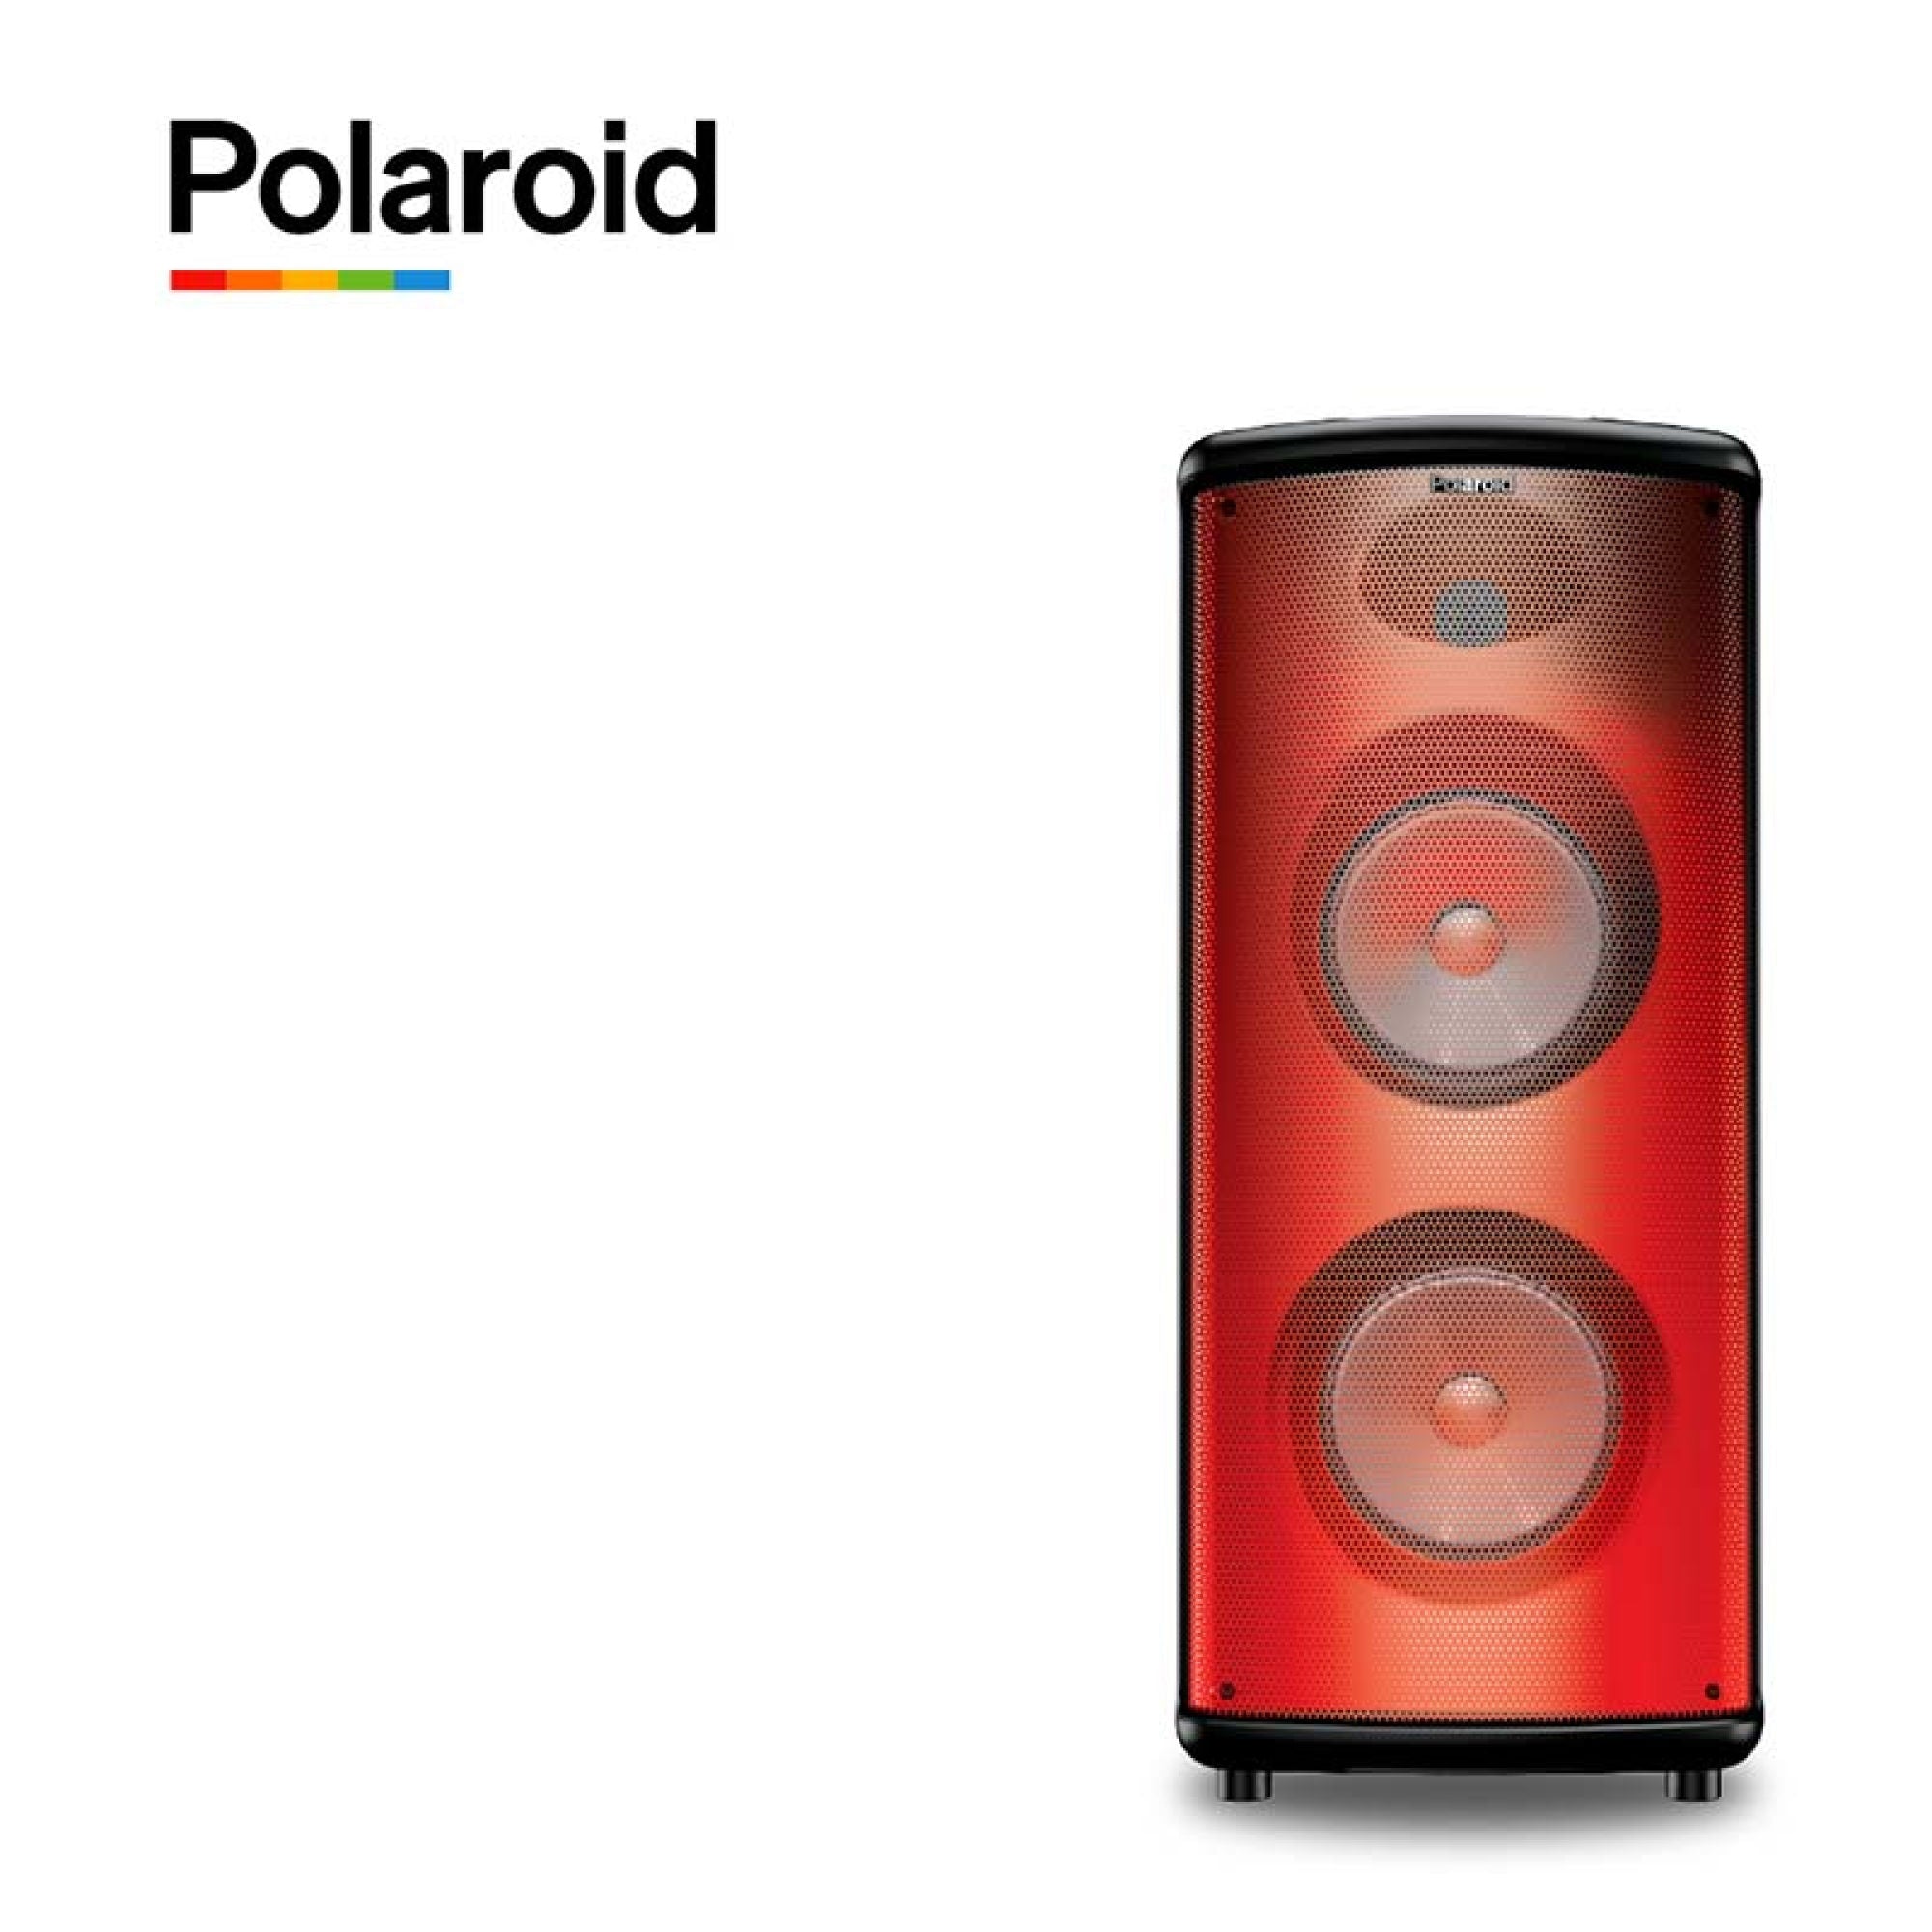 Parlante Karaoke Flame 6.5" Polaroid [Openbox]